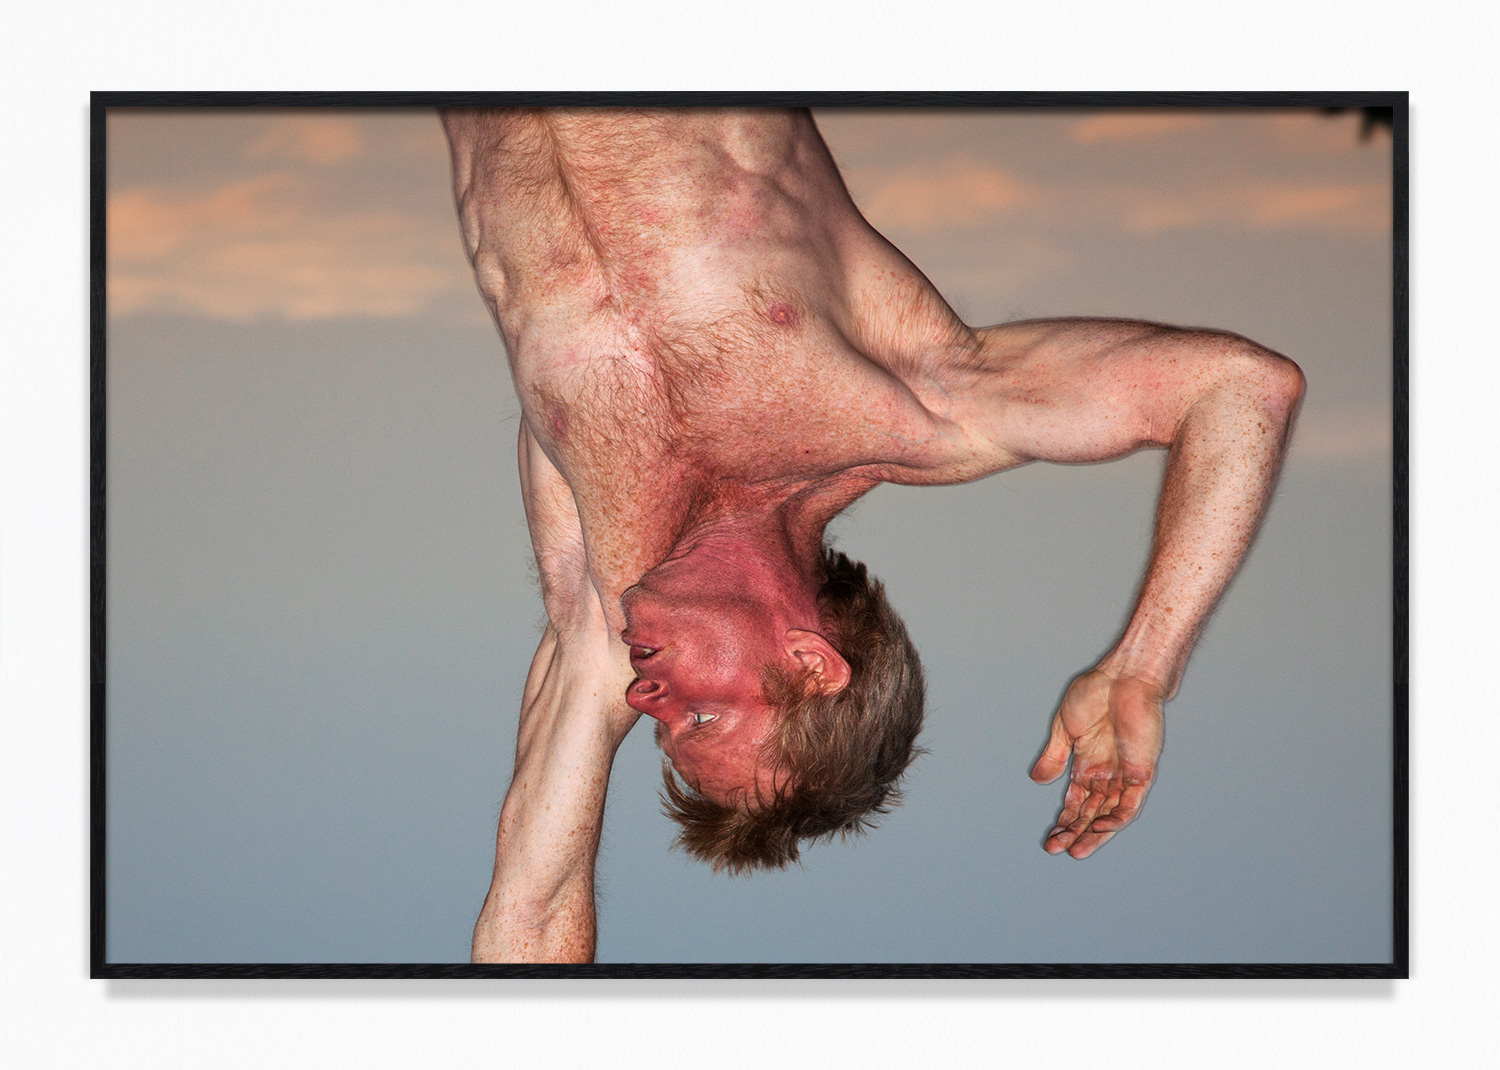 ayman elshaikh add naked man upside down photo